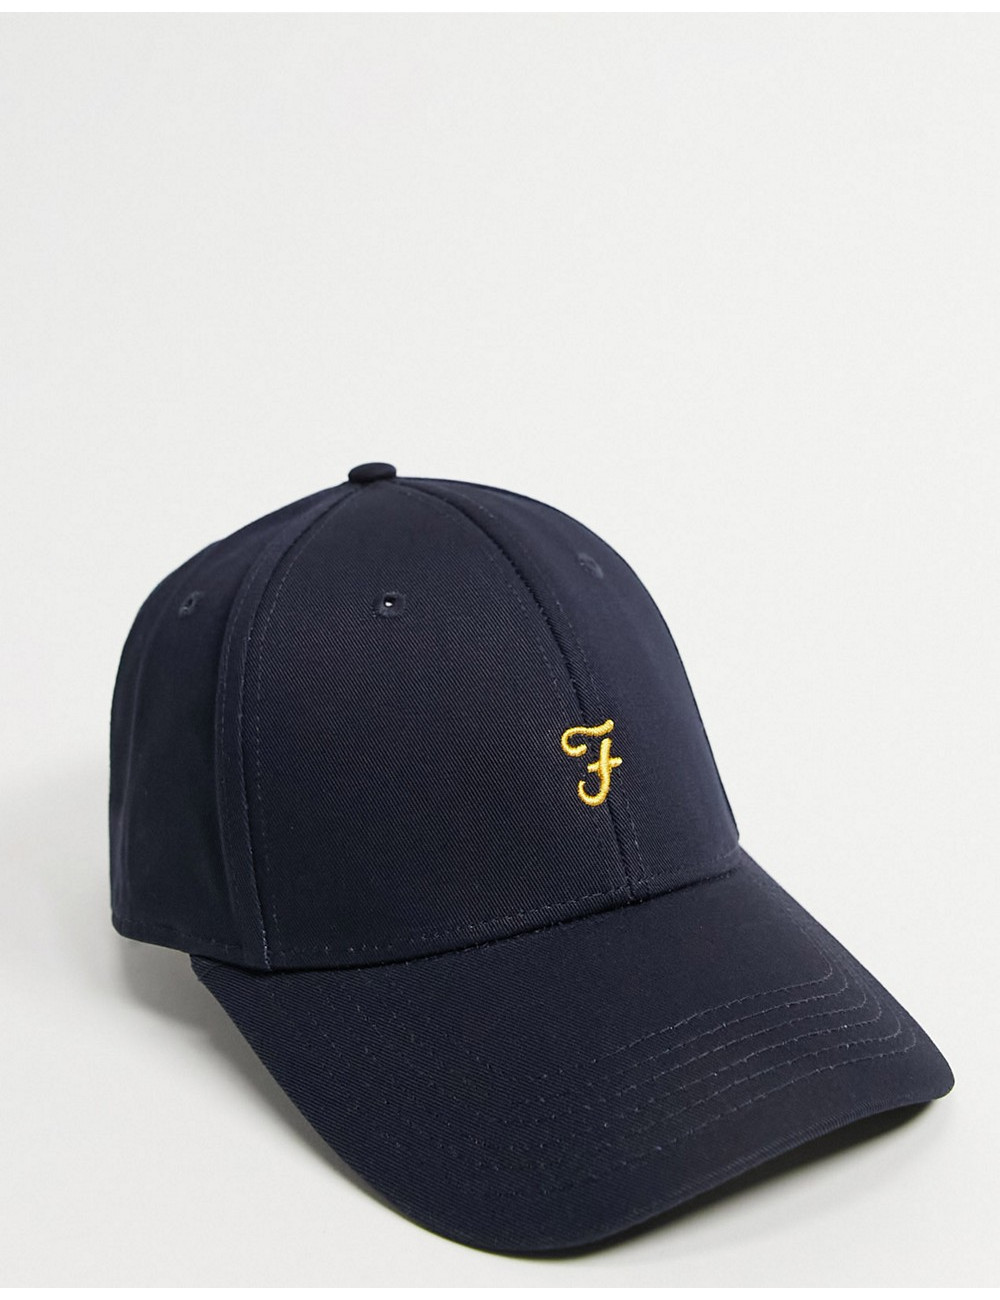 Farah logo cap in navy